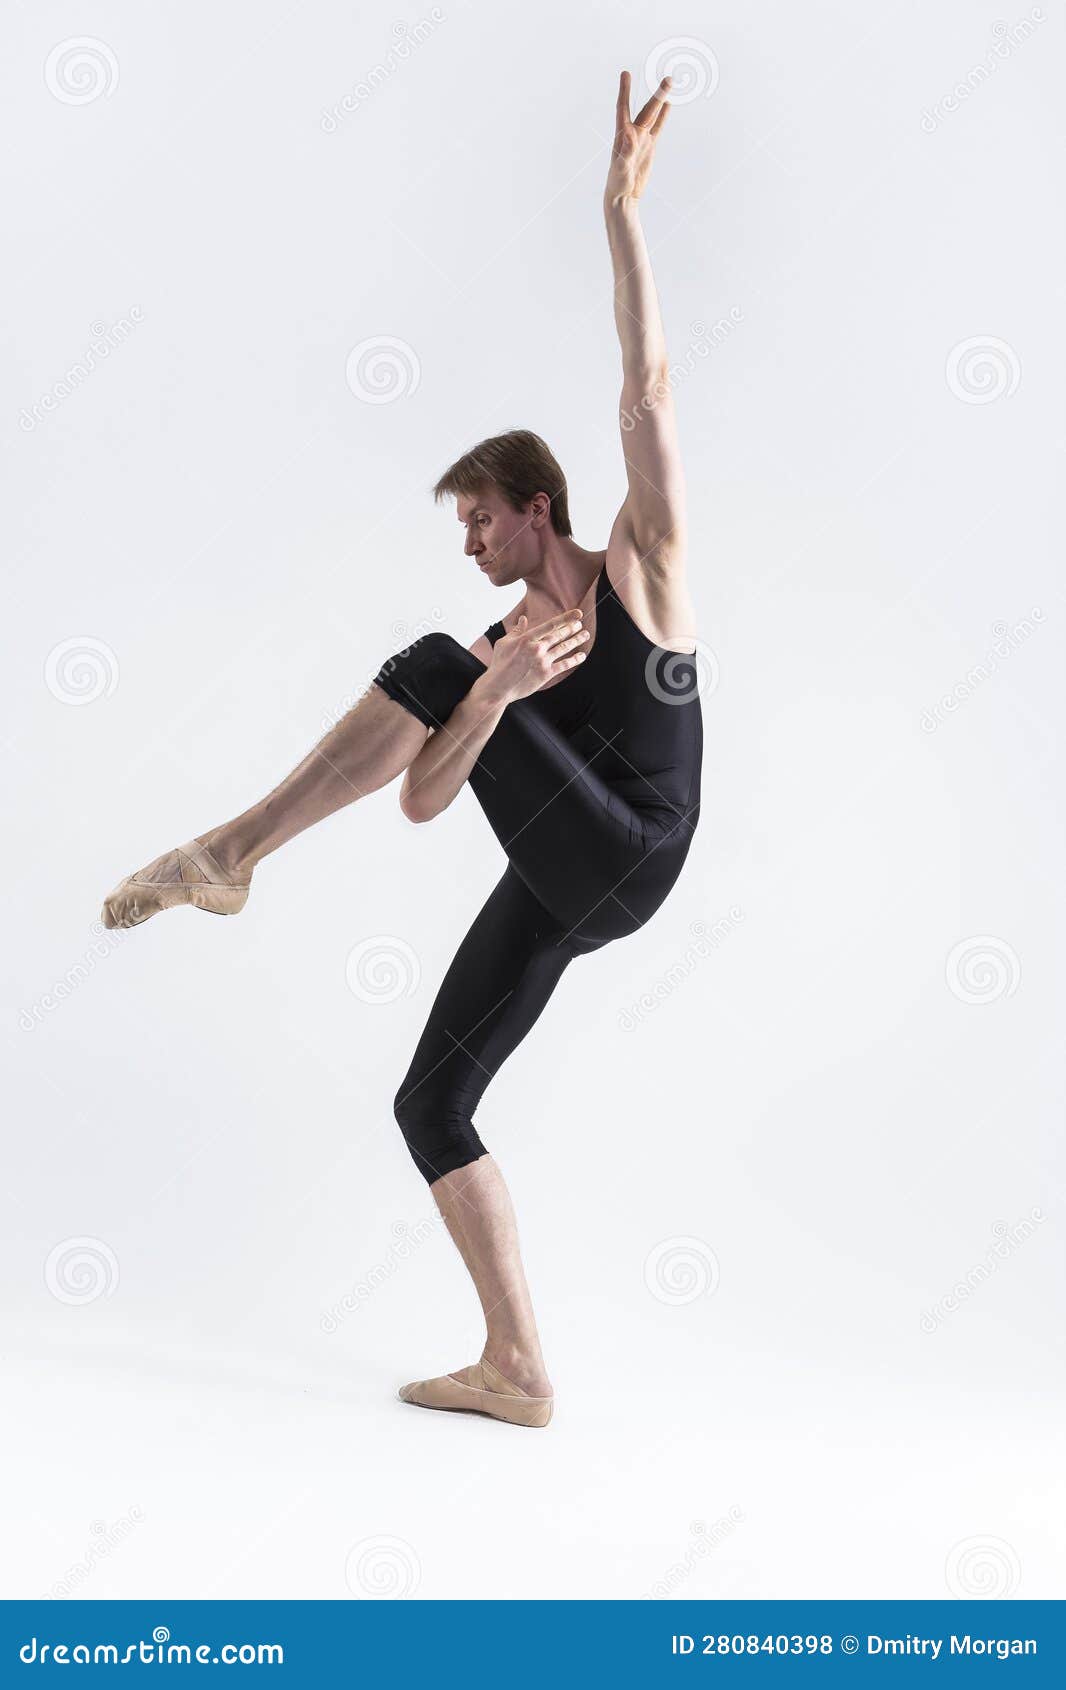 Male Ballet Dancer Man in Black Dance Suit Tights Posing in Ballanced ...